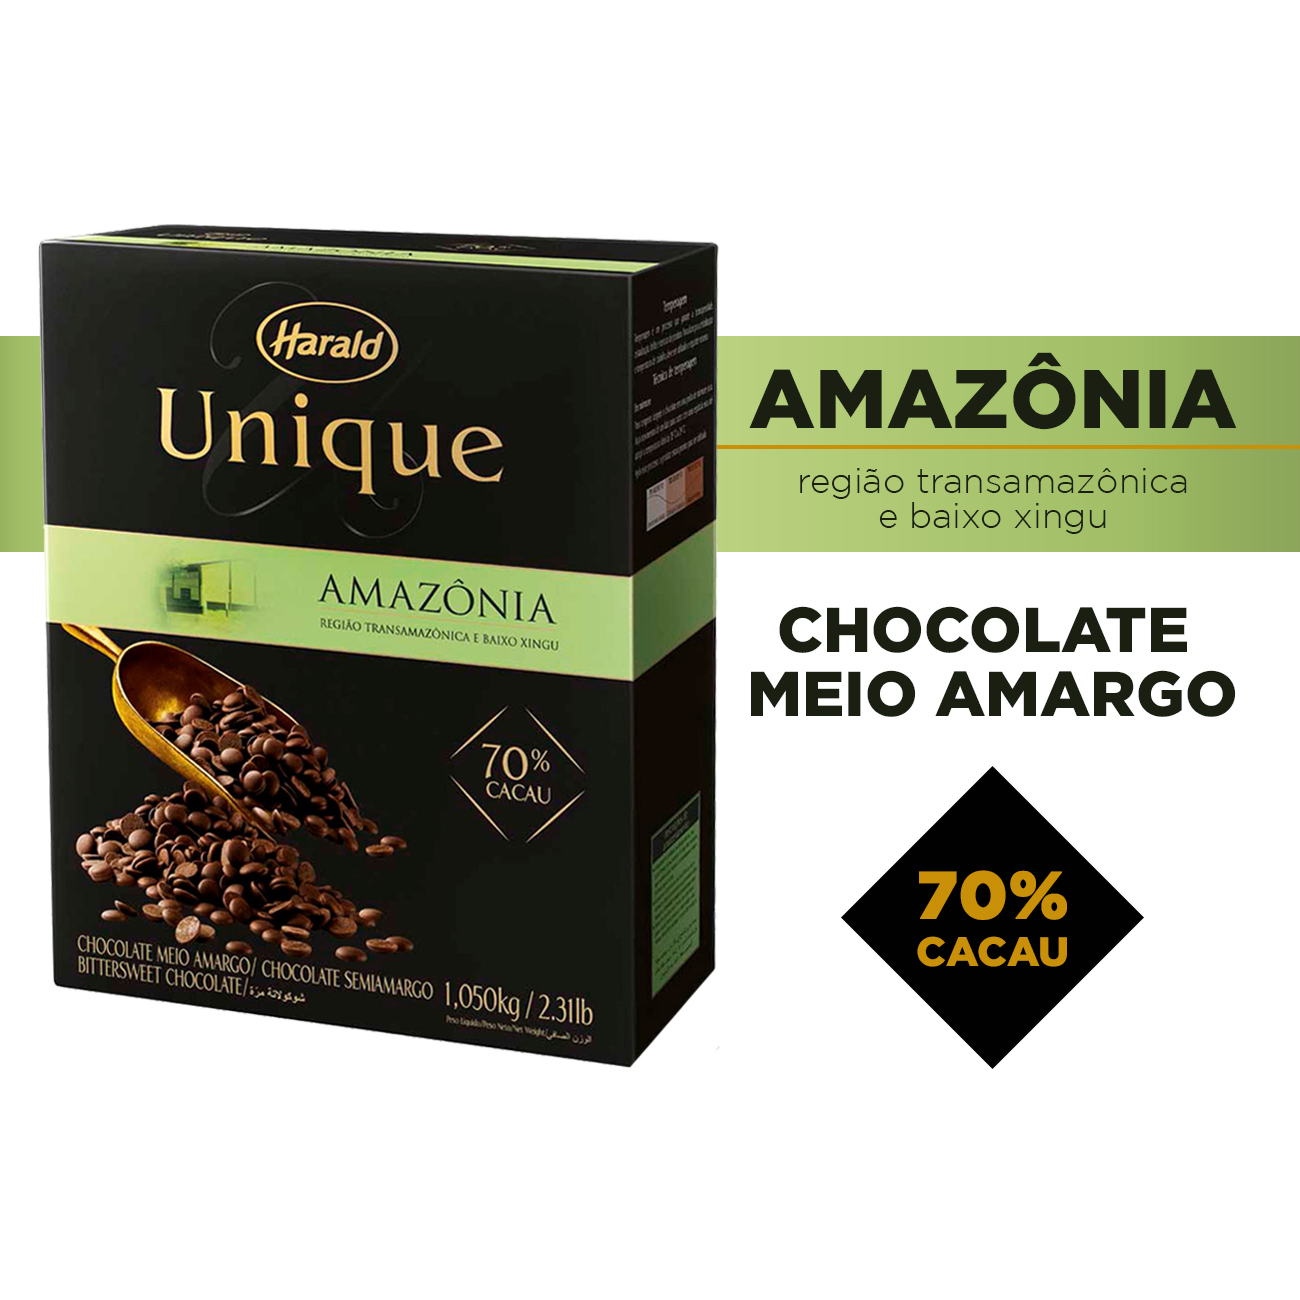 Gotas de Chocolate Harald Unique Amaznia Meio Amargo 70% Cacau 1,05kg